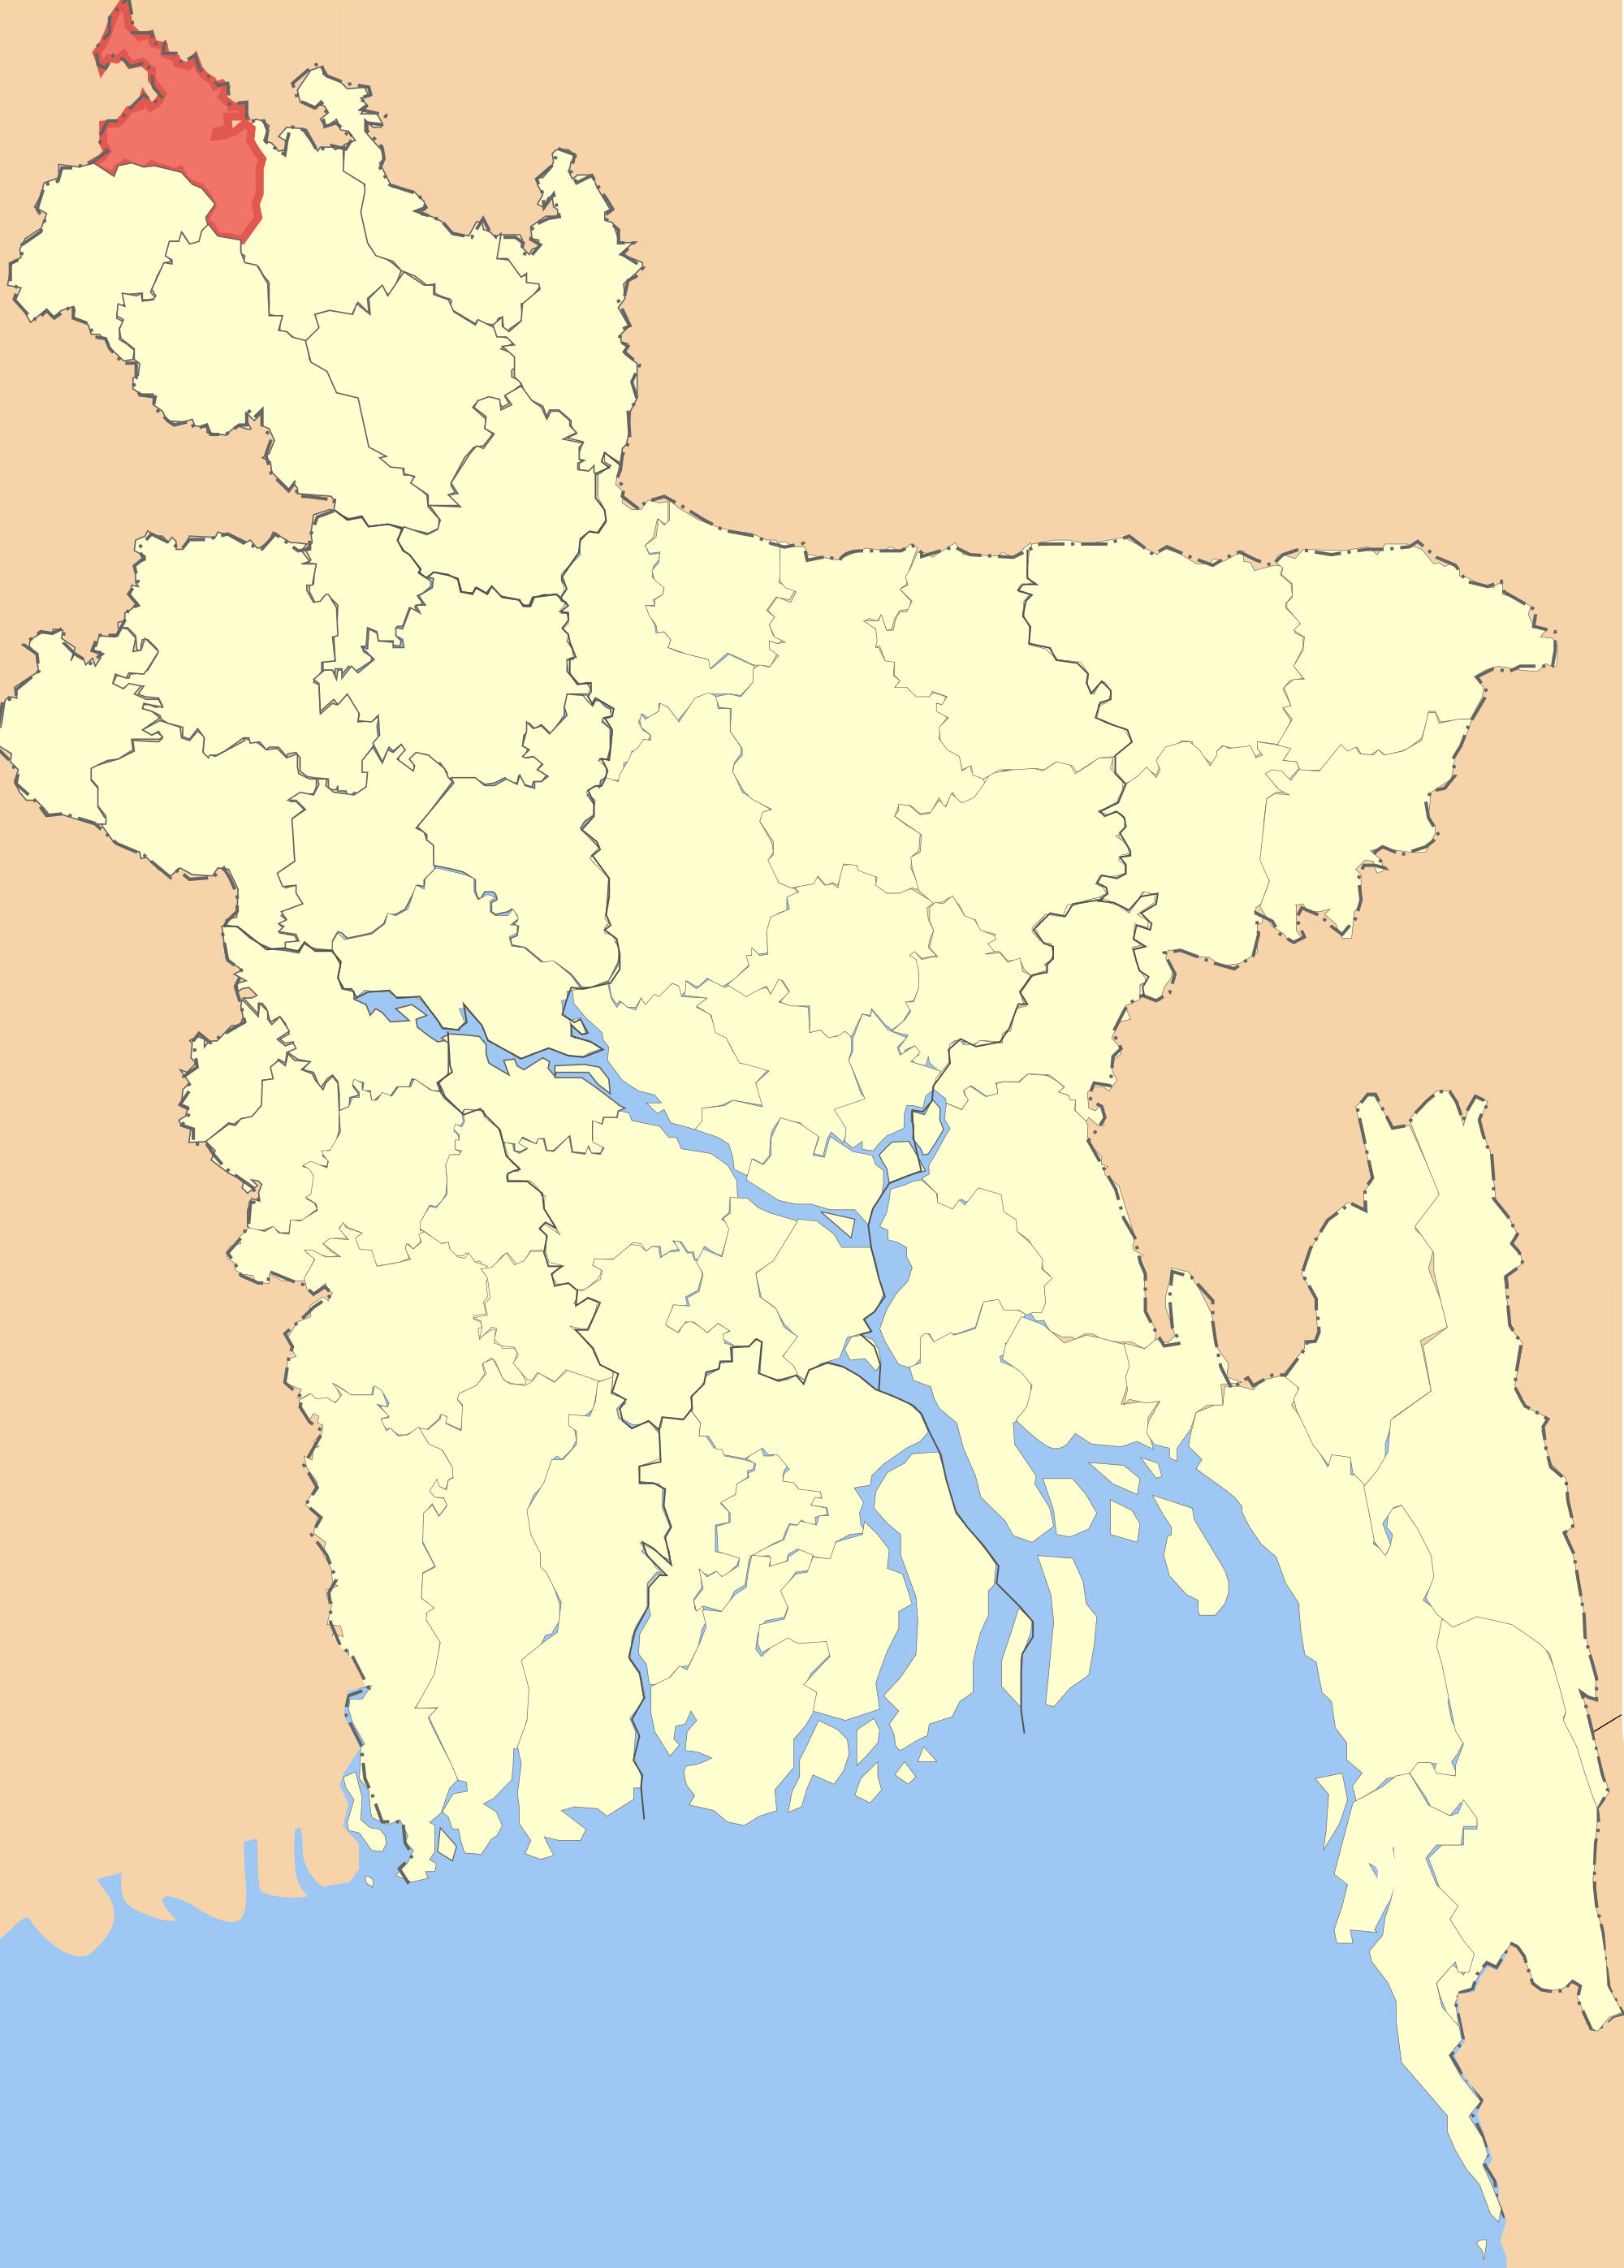 BD_Panchagarh_District_locator_map.svg.png